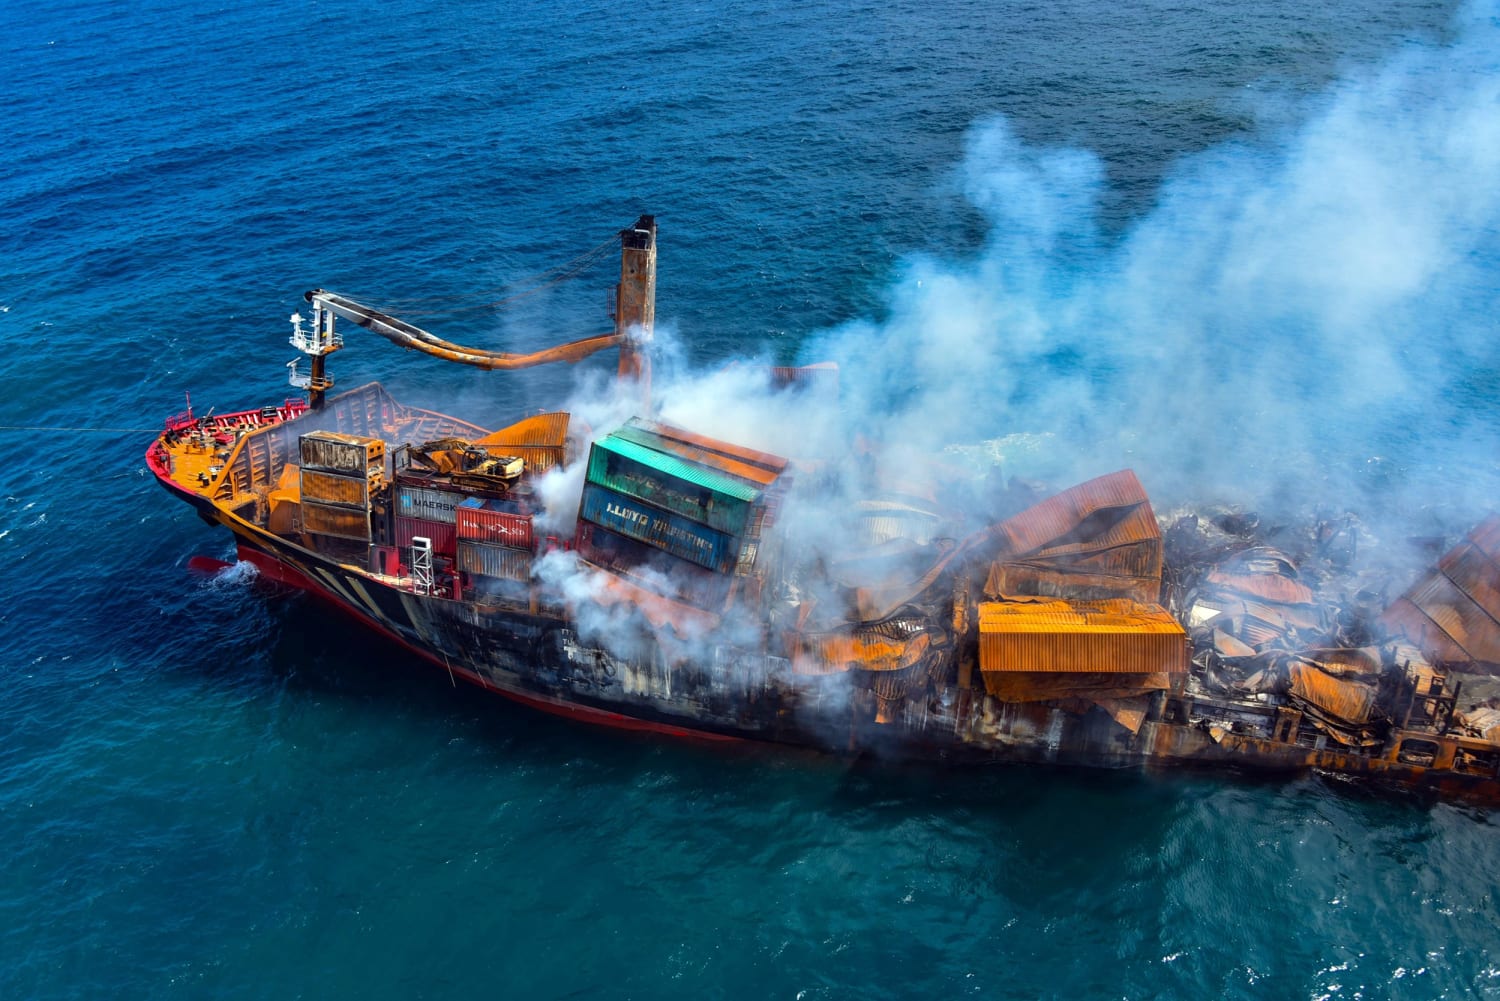 Cargo ship sinks off Sri Lanka after weeks on fire, sparking fears of